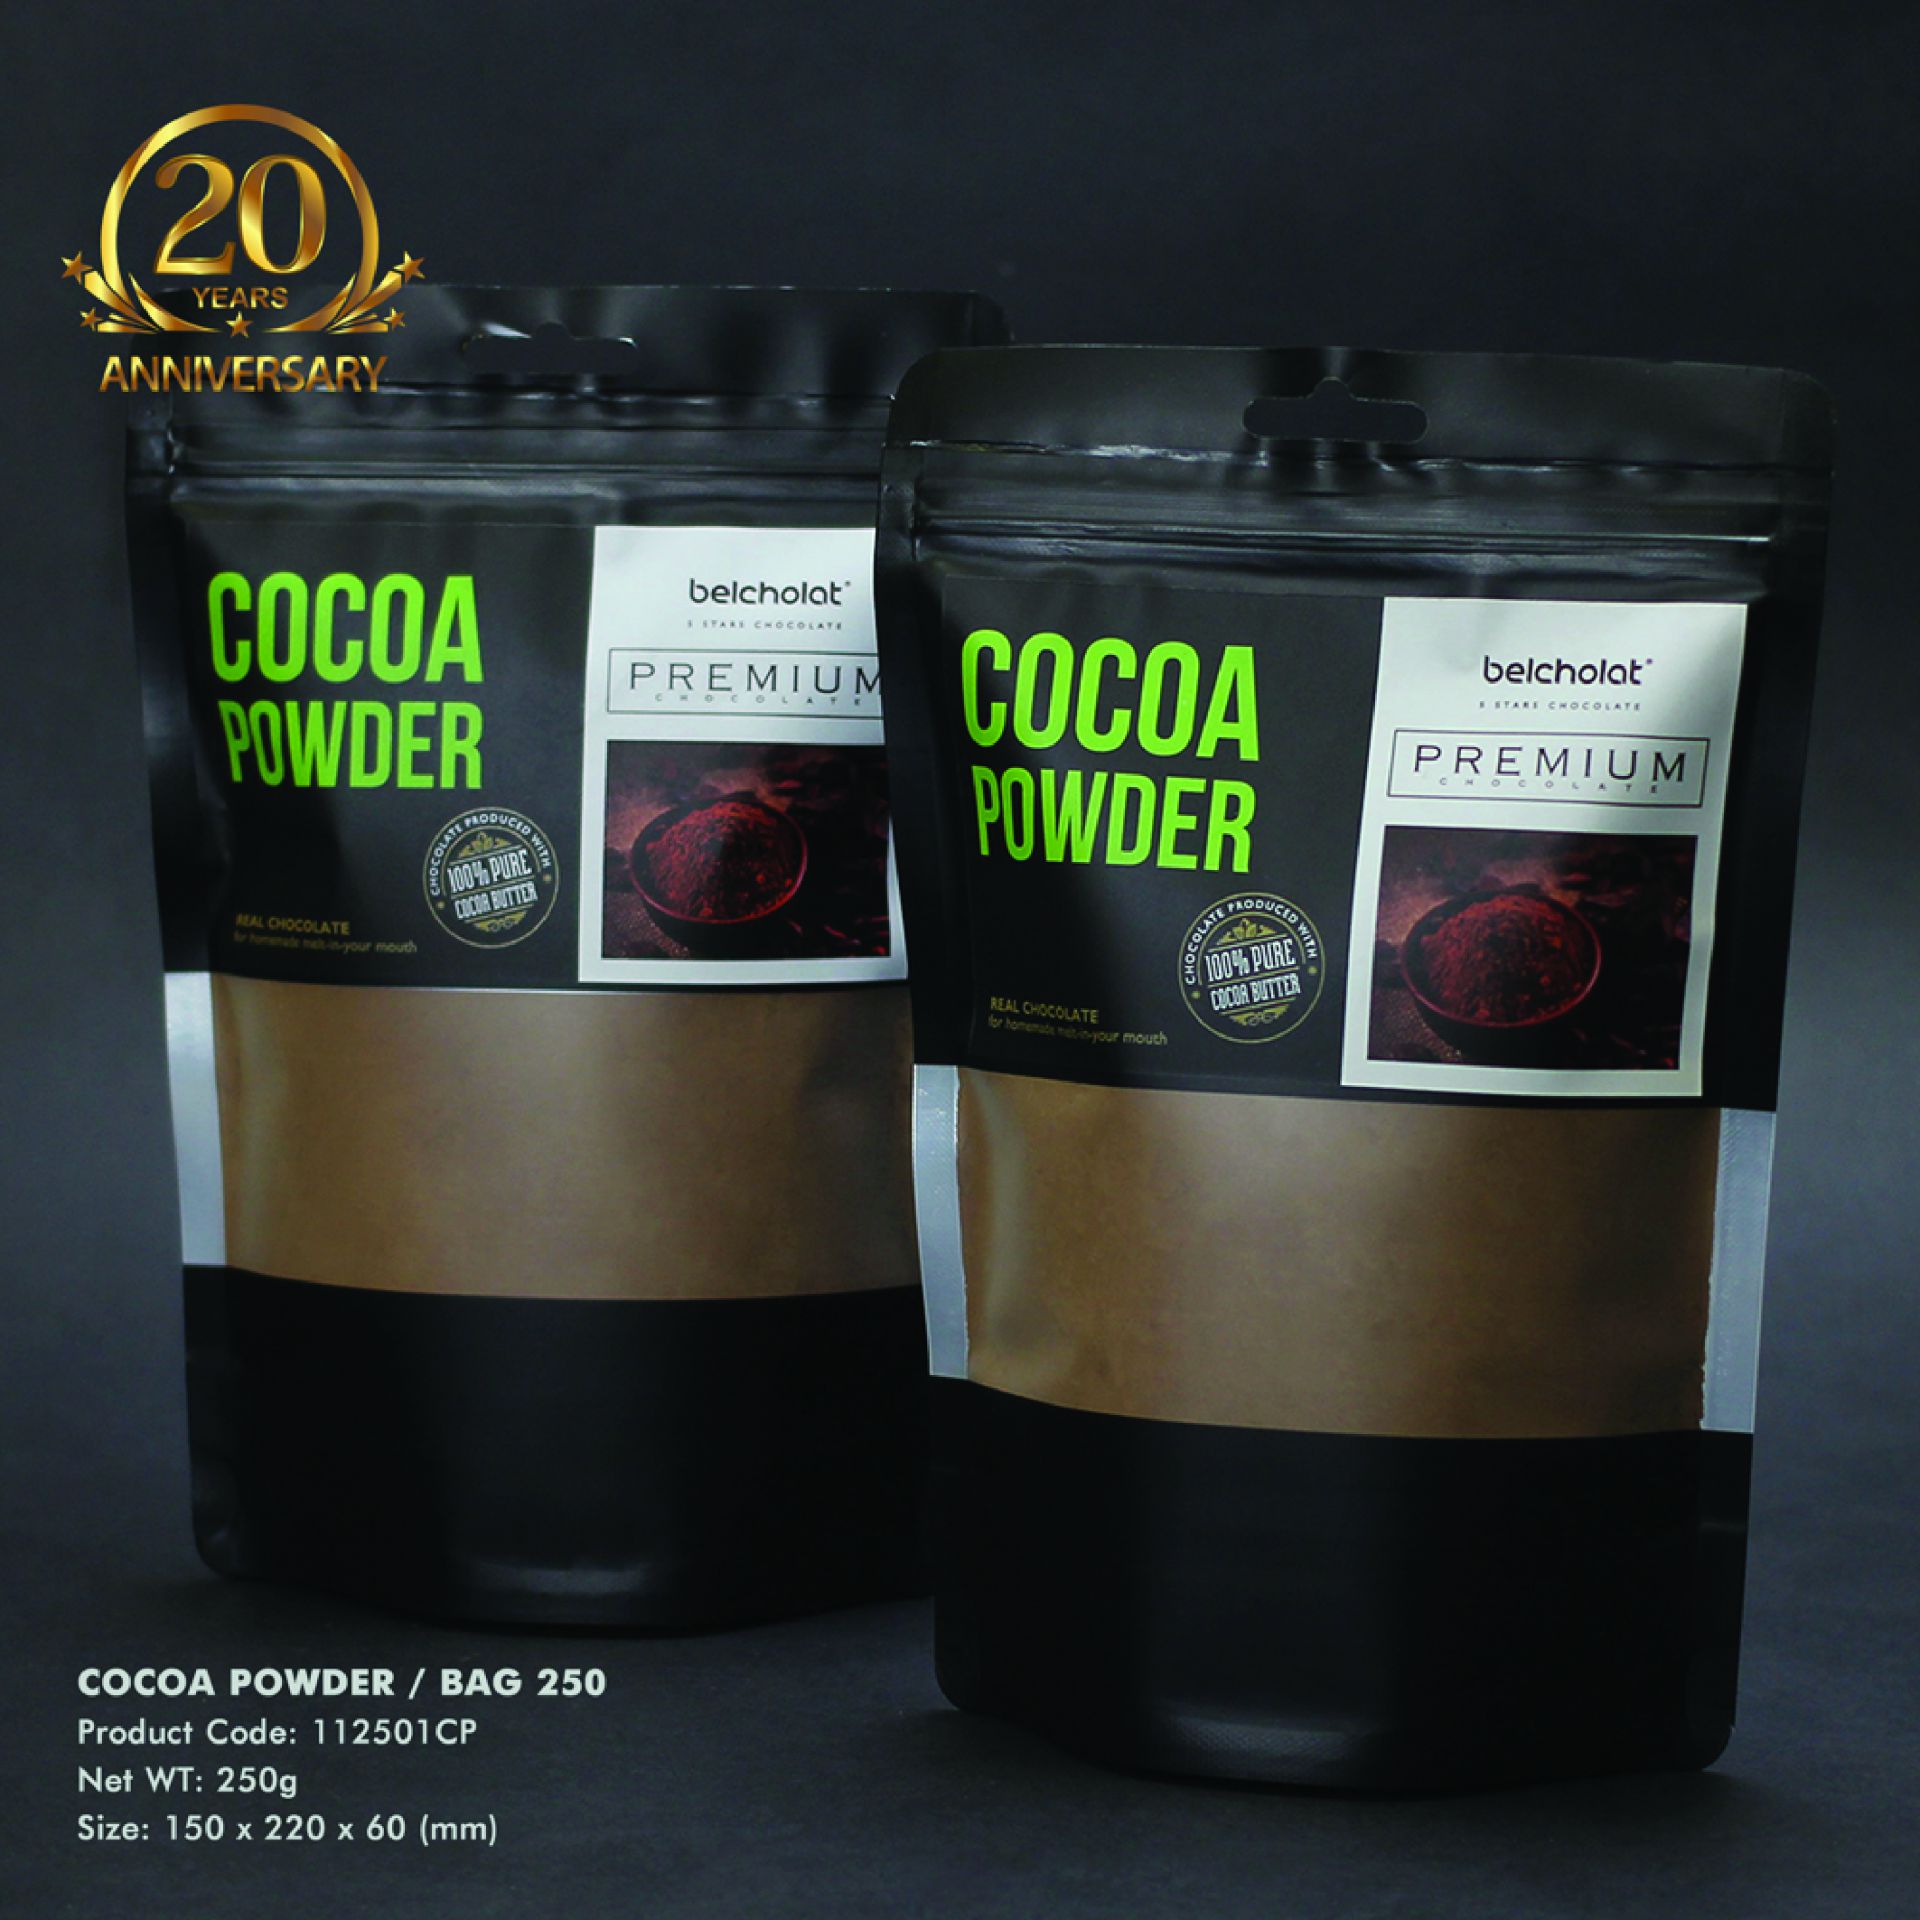 Cocoa Powder / Bag 250